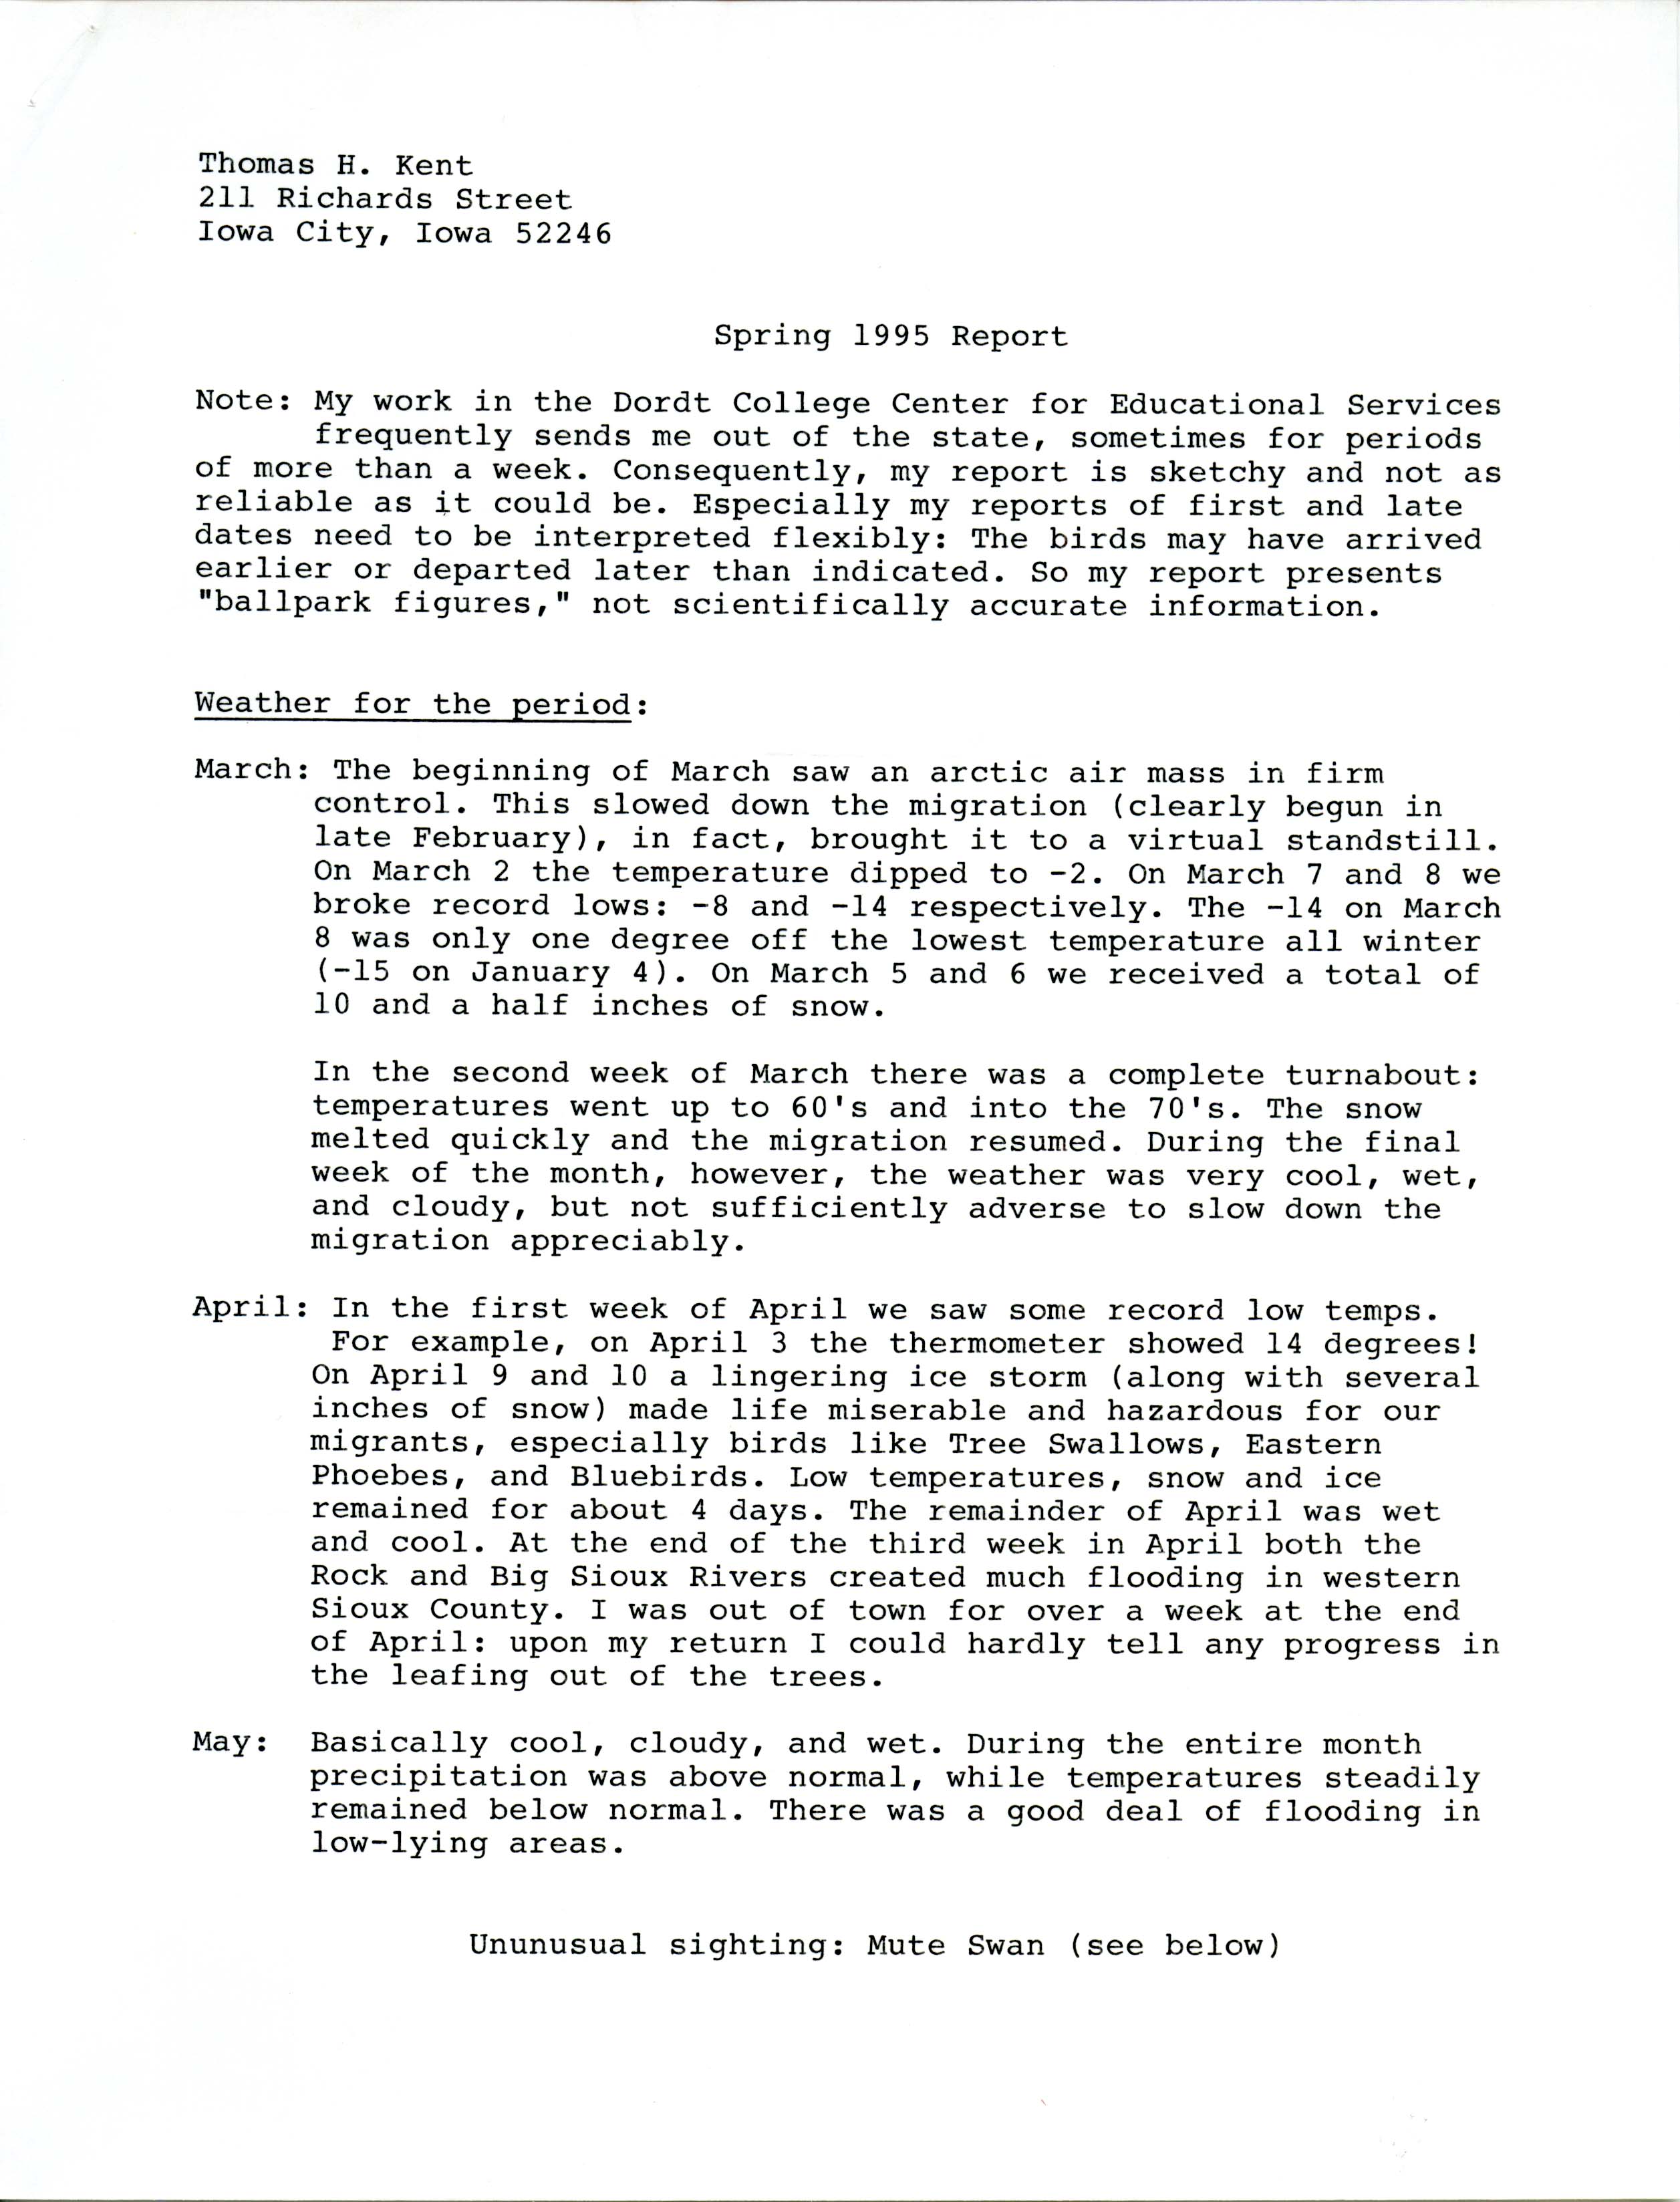 Spring 1995 report, John Van Dyk